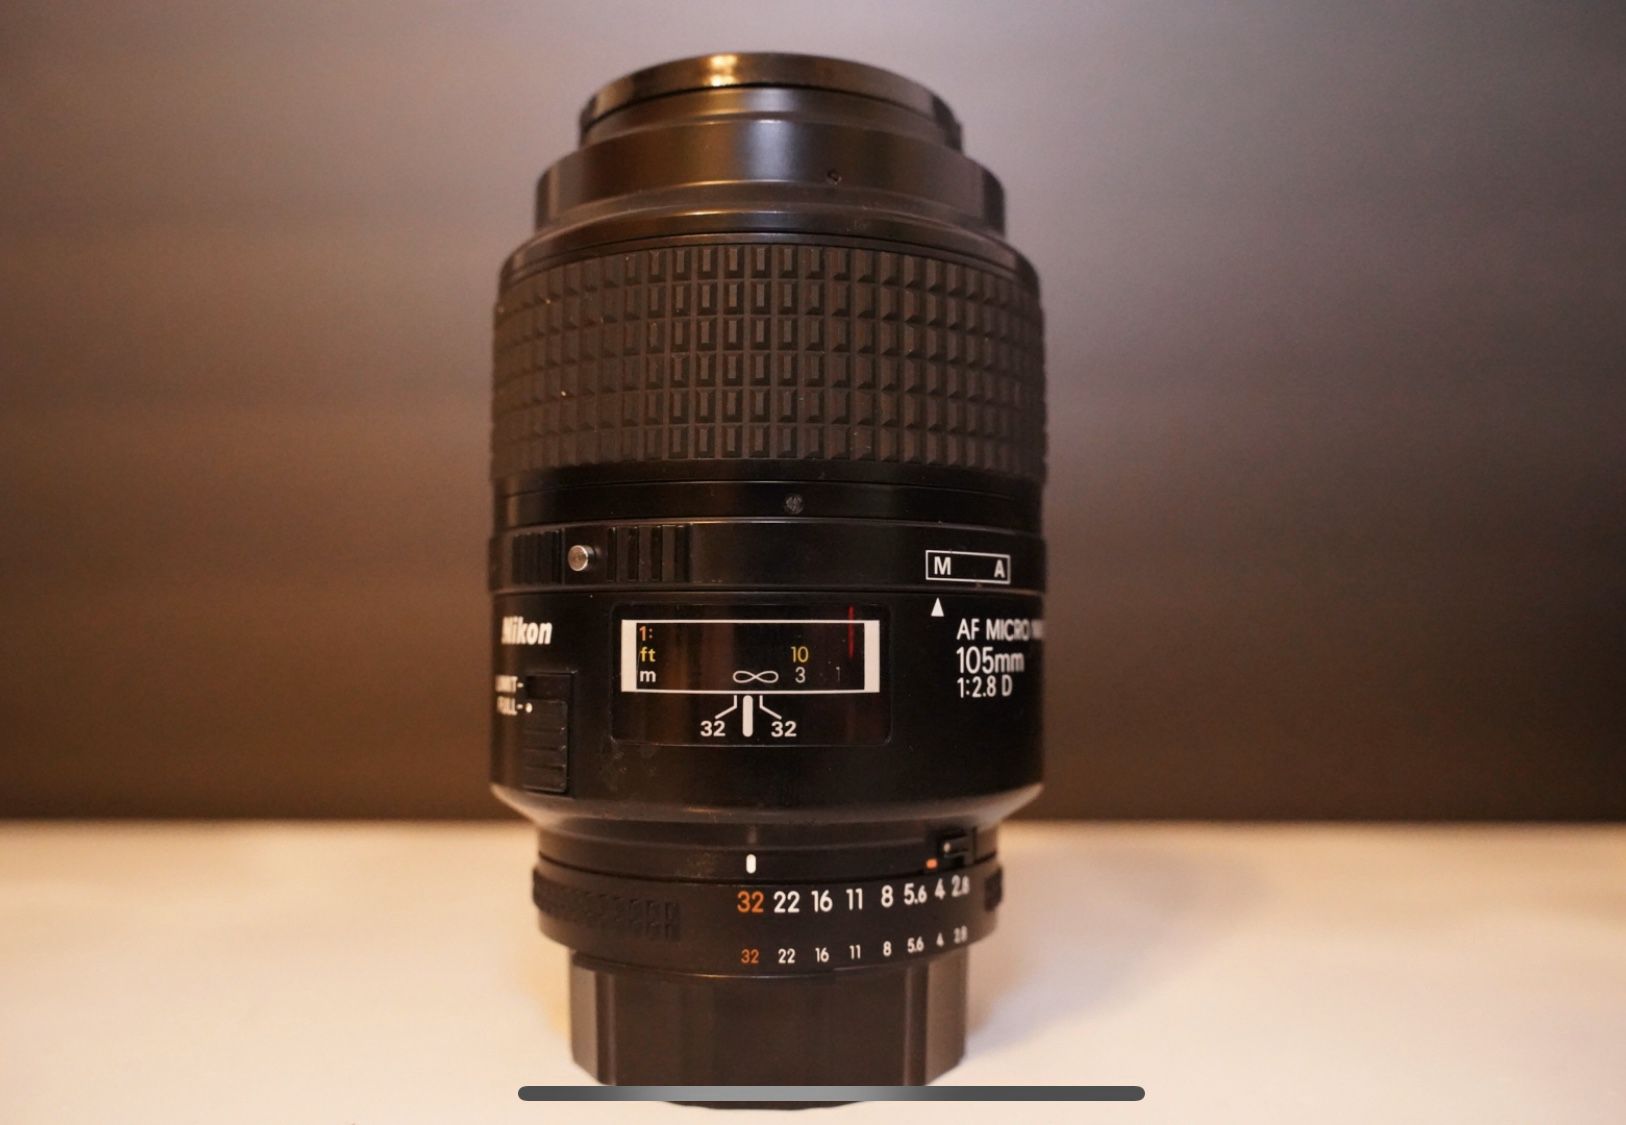 Nikon Telephoto AF Micro Nikkor 105mm f/2.8D Autofocus Lens